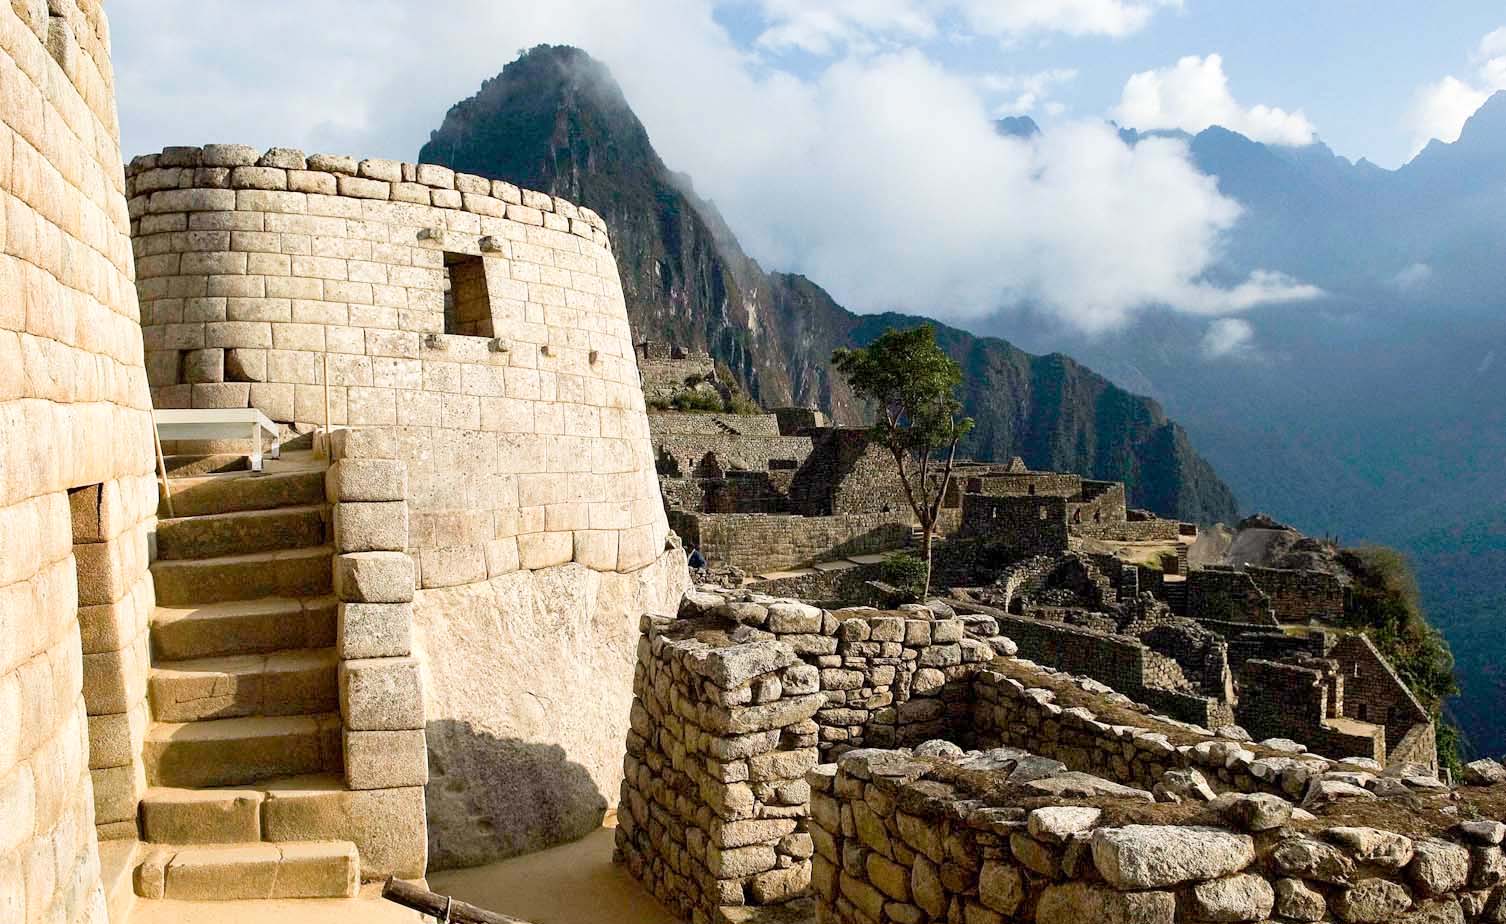 Inca civilization - 8 days